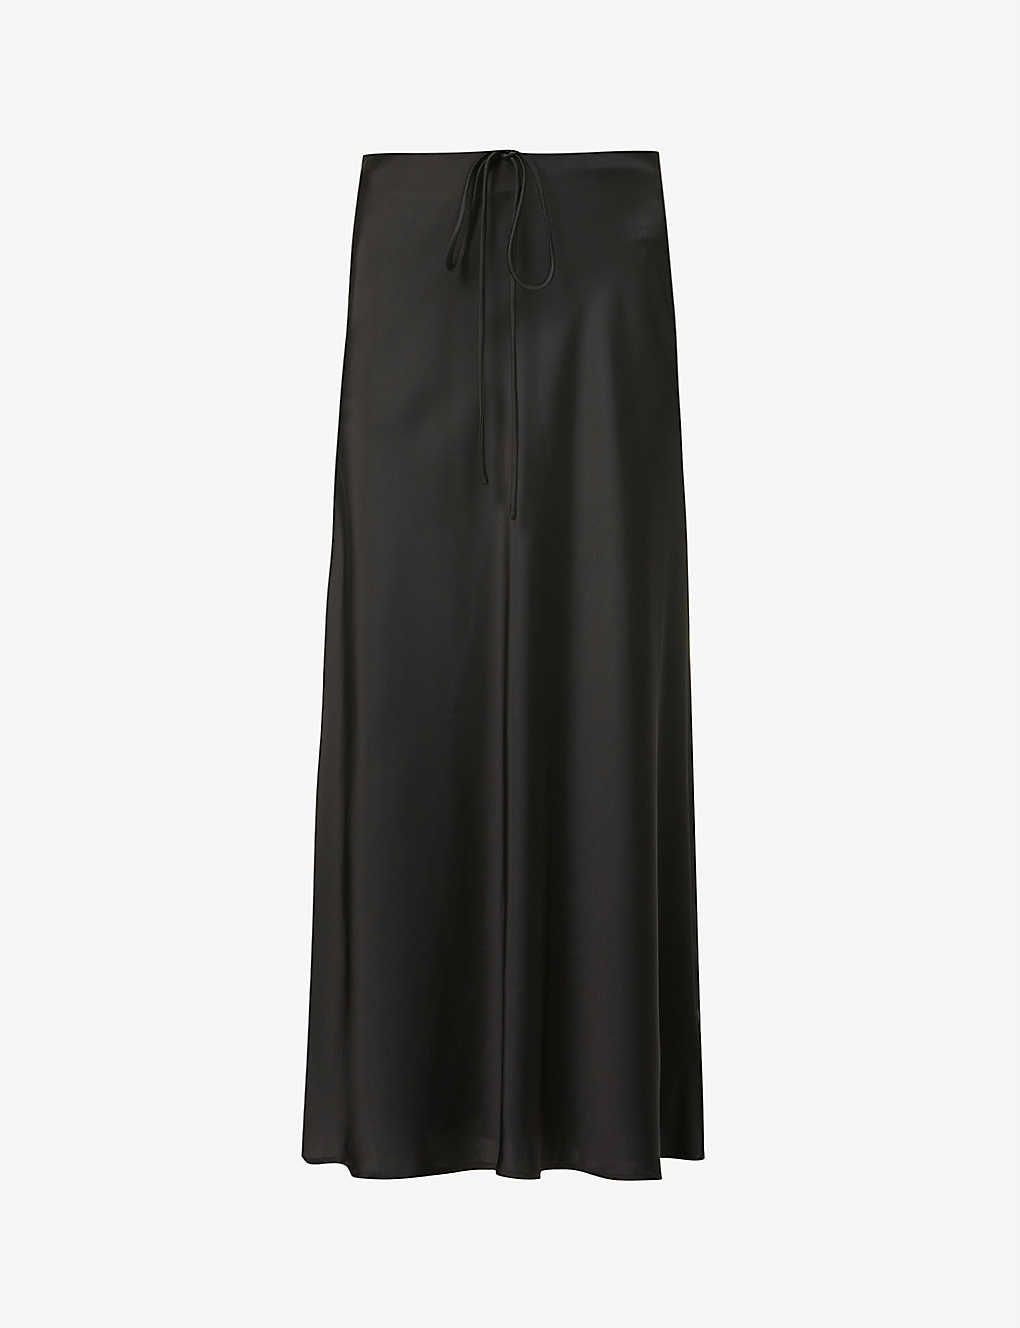 MUSIER PARIS Romane high-waist satin midi skirt | Selfridges